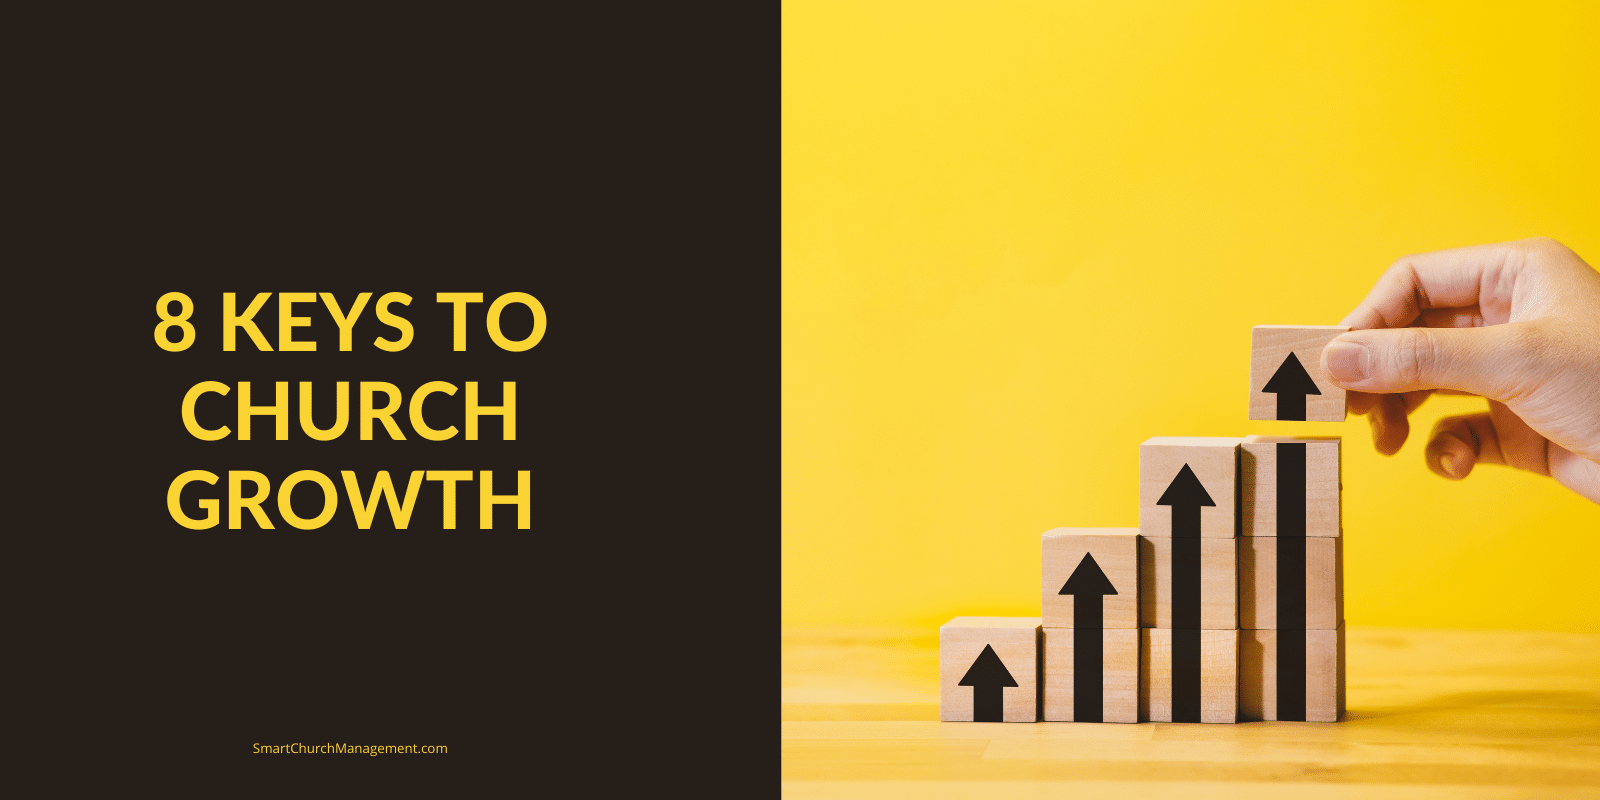 Learn how to grow your church